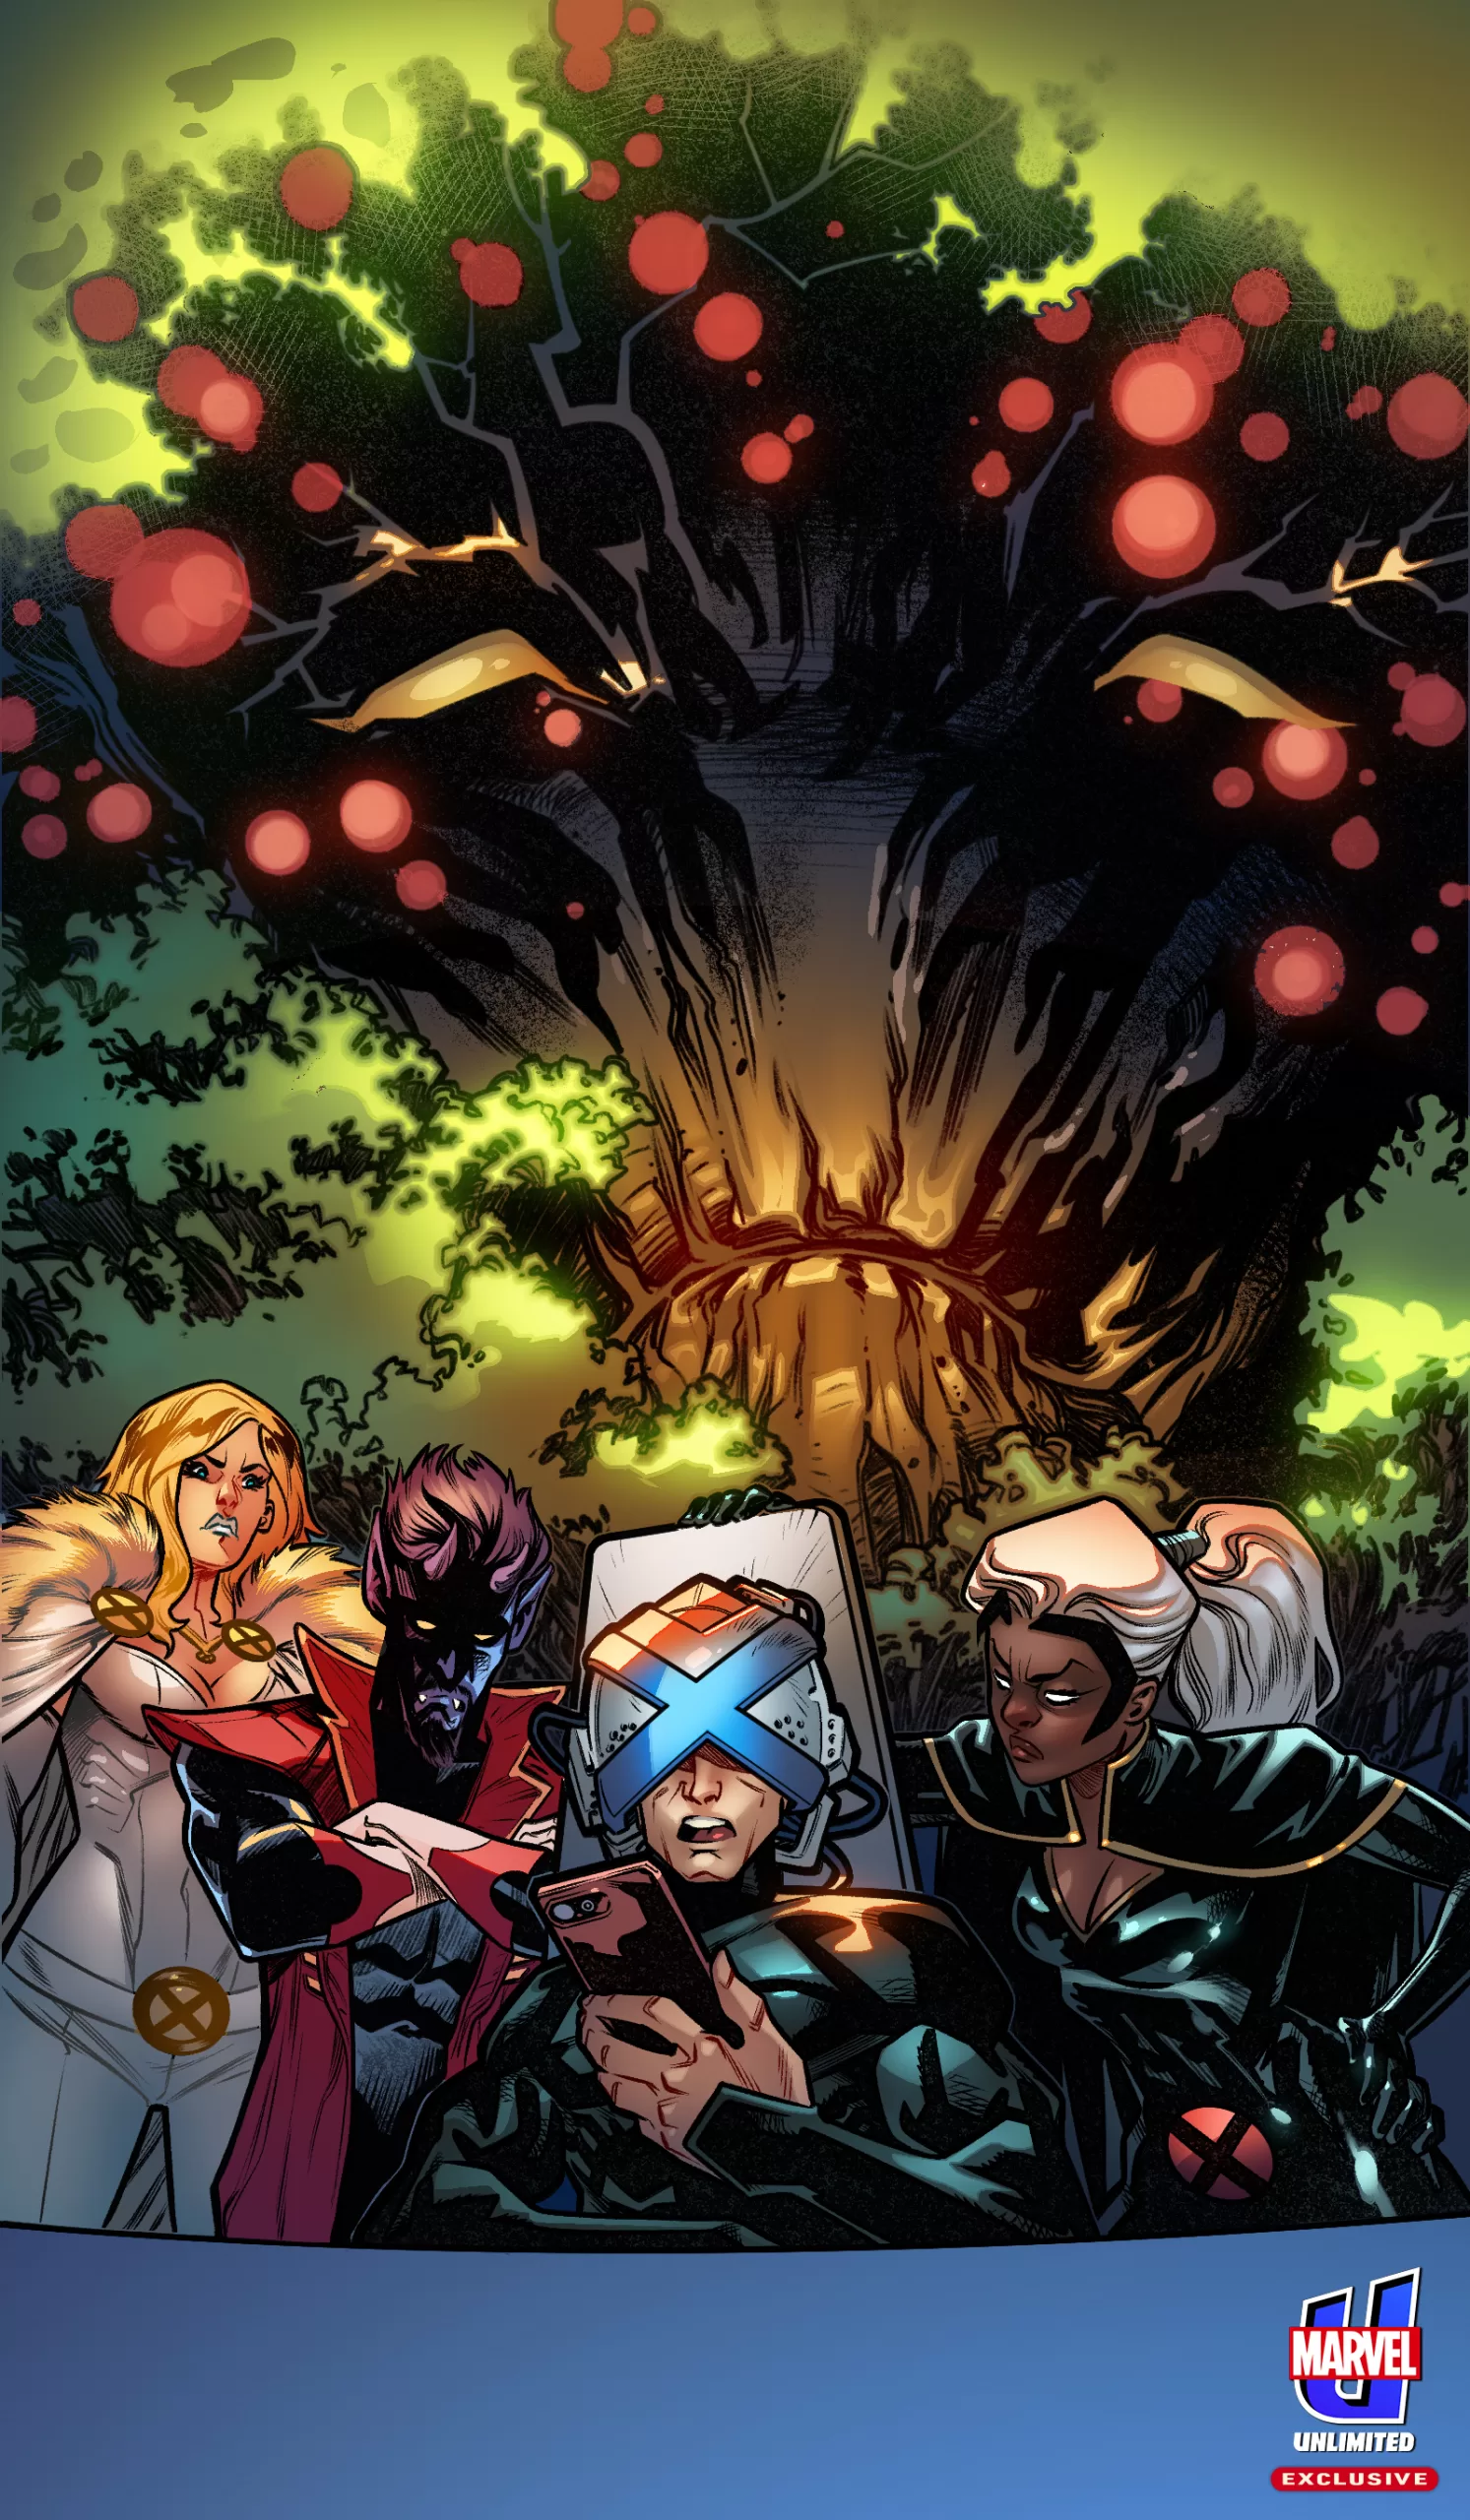 The X-Men '97 Team Join Mutantkind's Biggest Night in a New 'X-Men